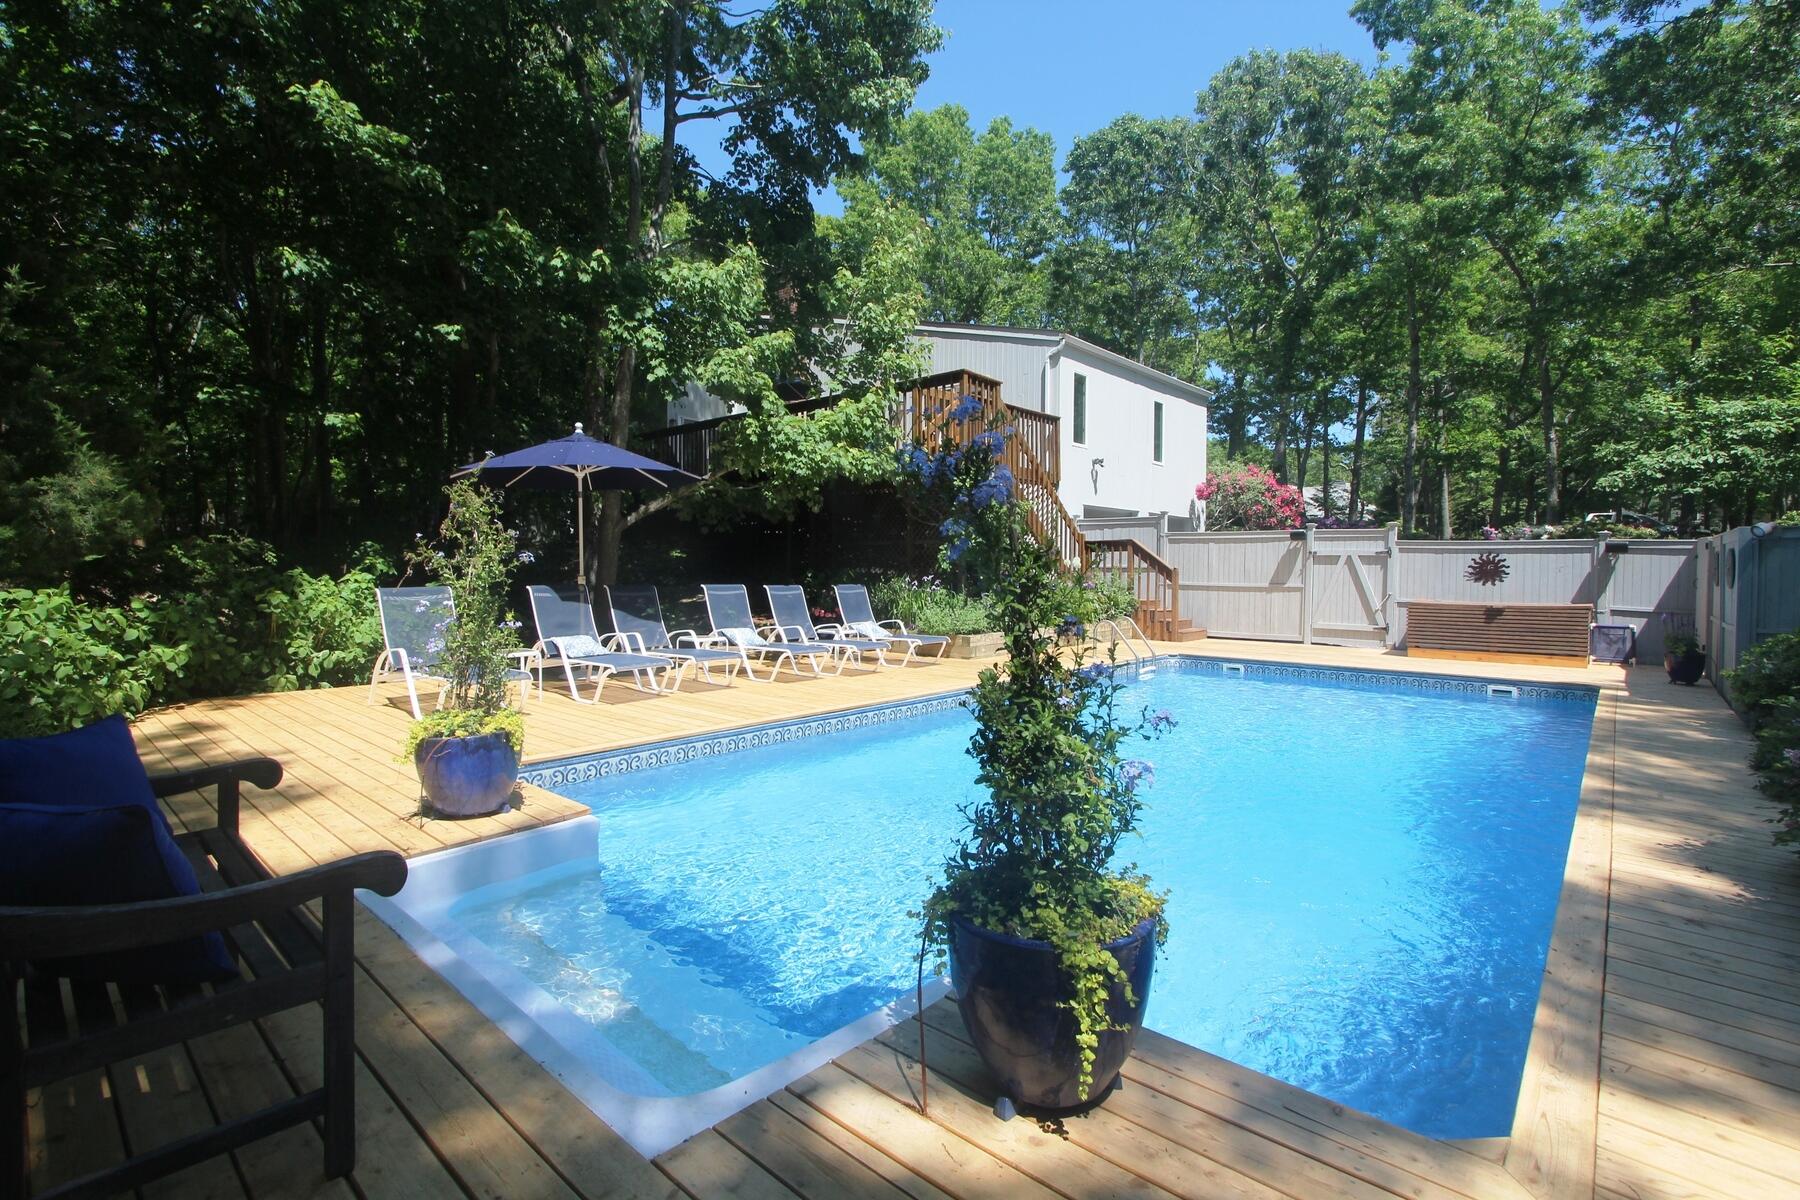 Rental Property at Springs, Springs, Hamptons, NY - Bedrooms: 4 
Bathrooms: 2  - $25,000 MO.